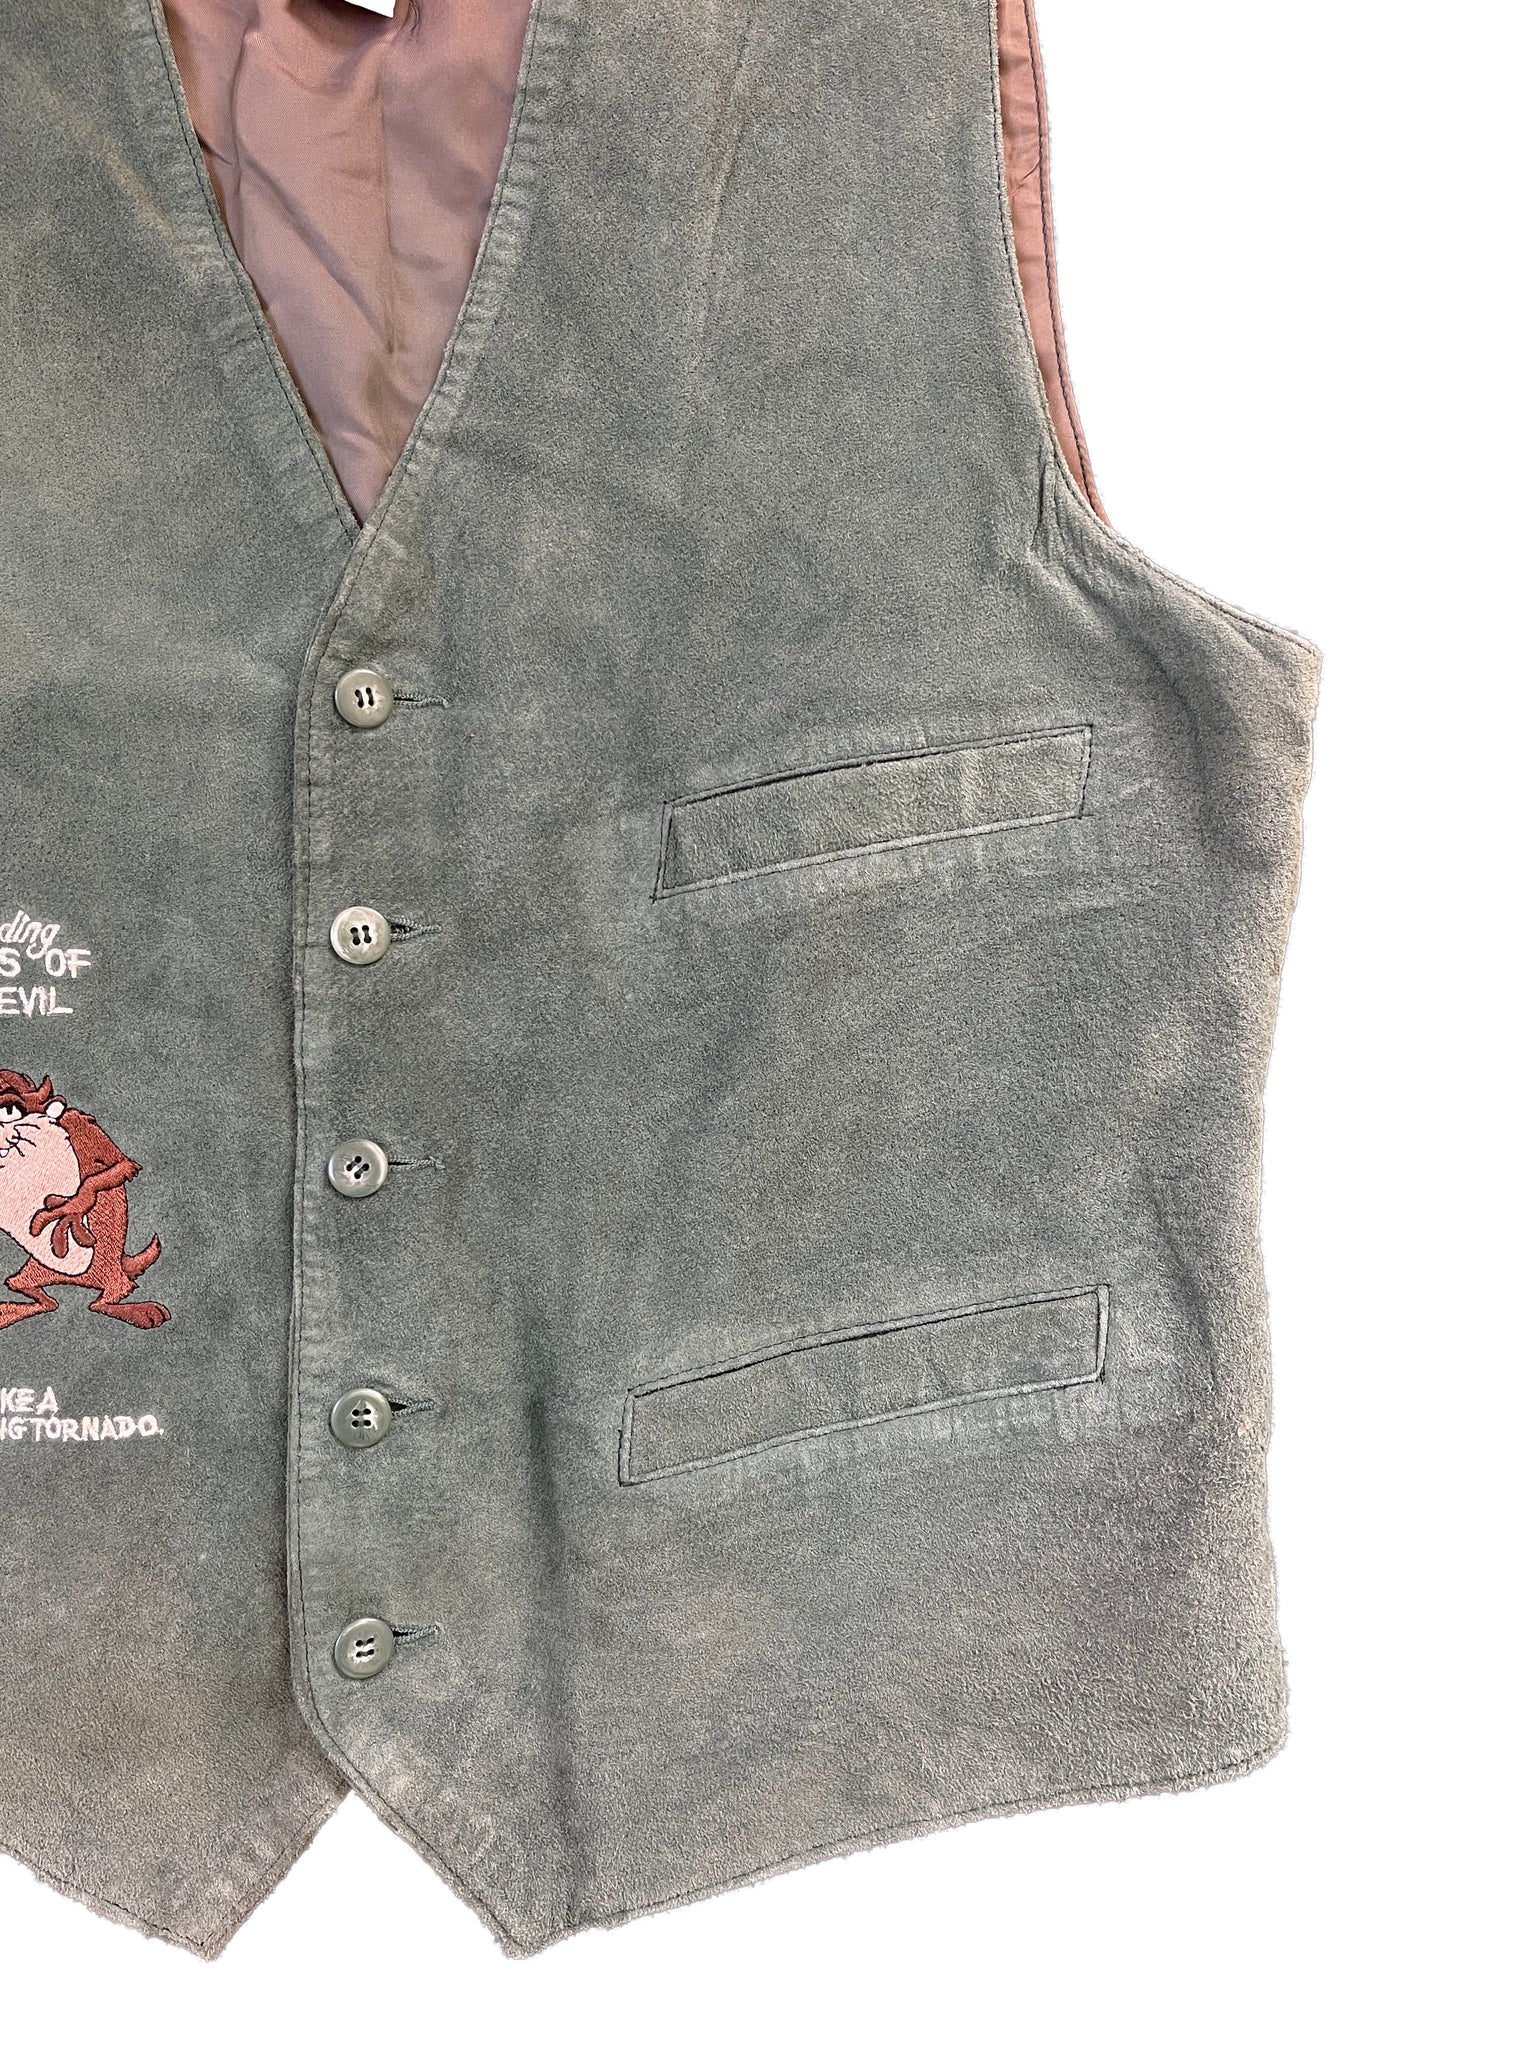 vintage looney tunes leather vest